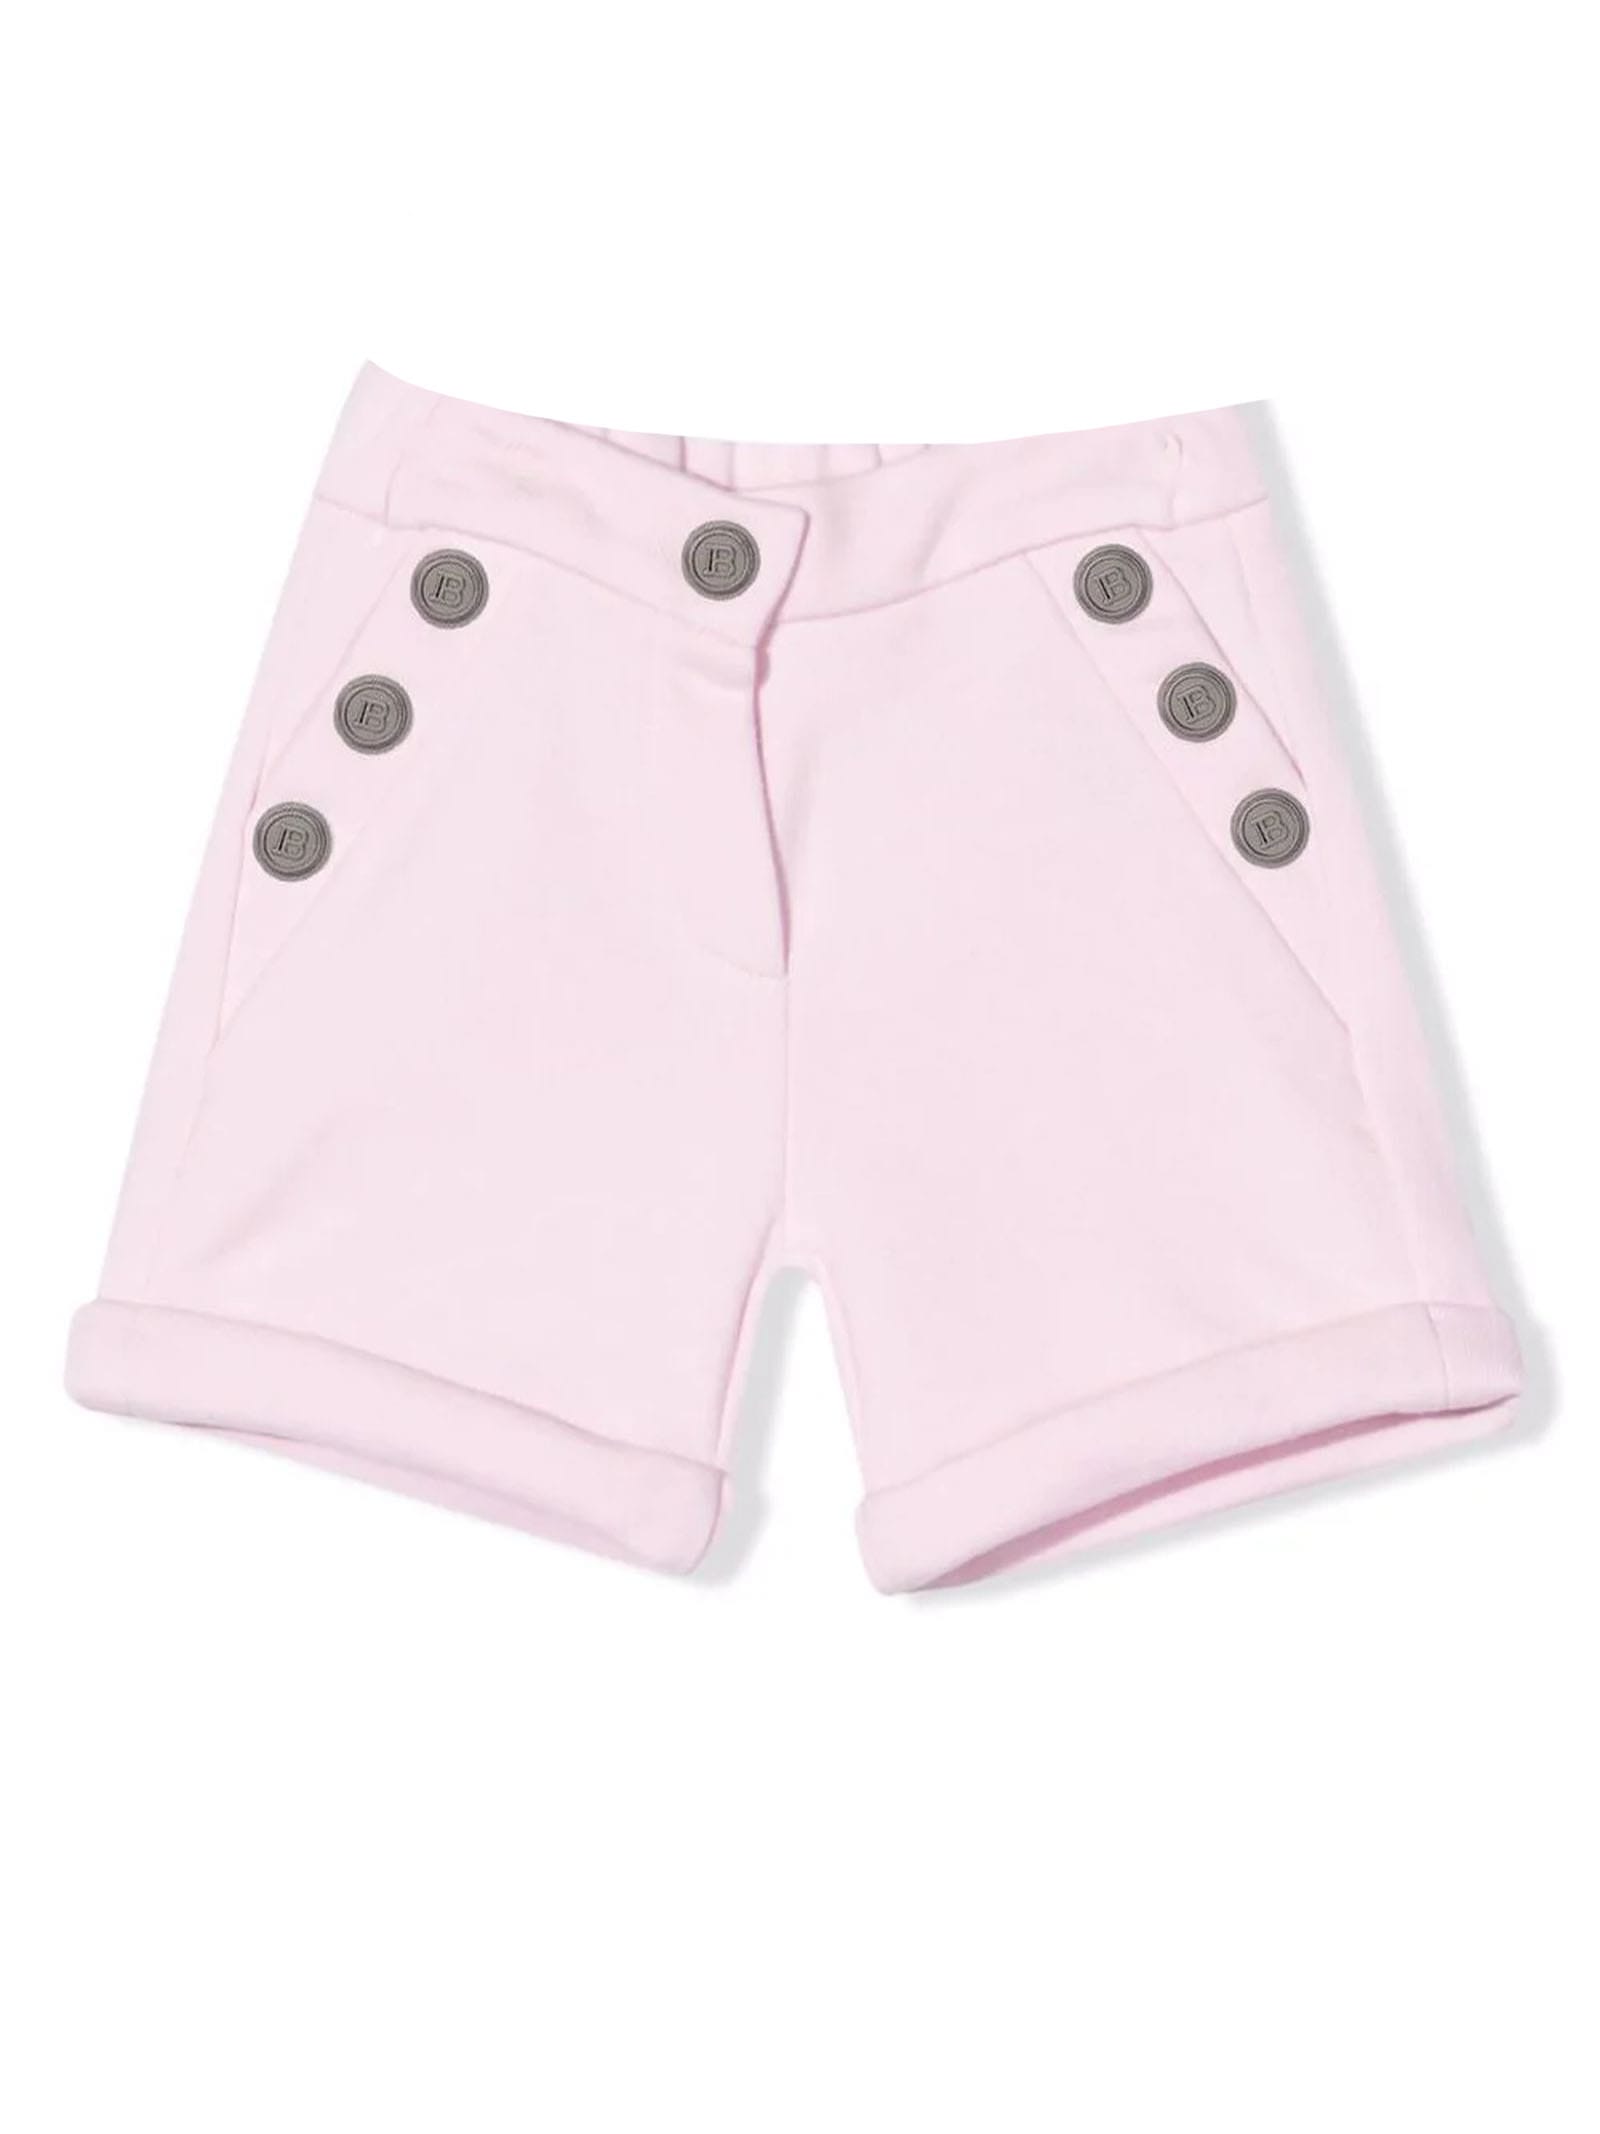 Balmain Light Pink Cotton Shorts